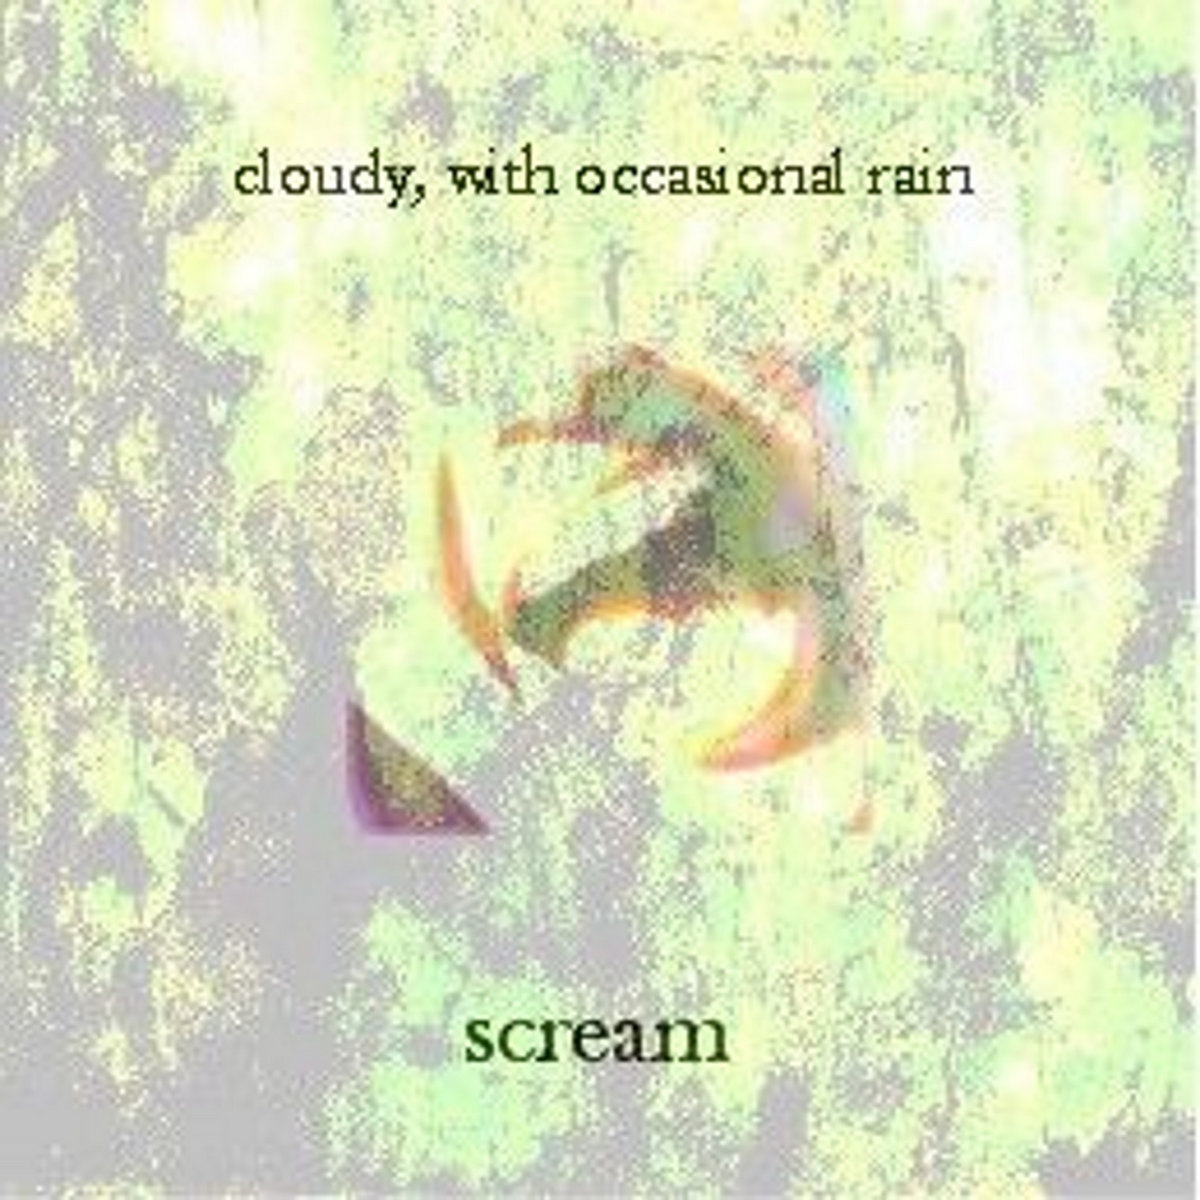 cloudy, with occasional rain - scream album cover